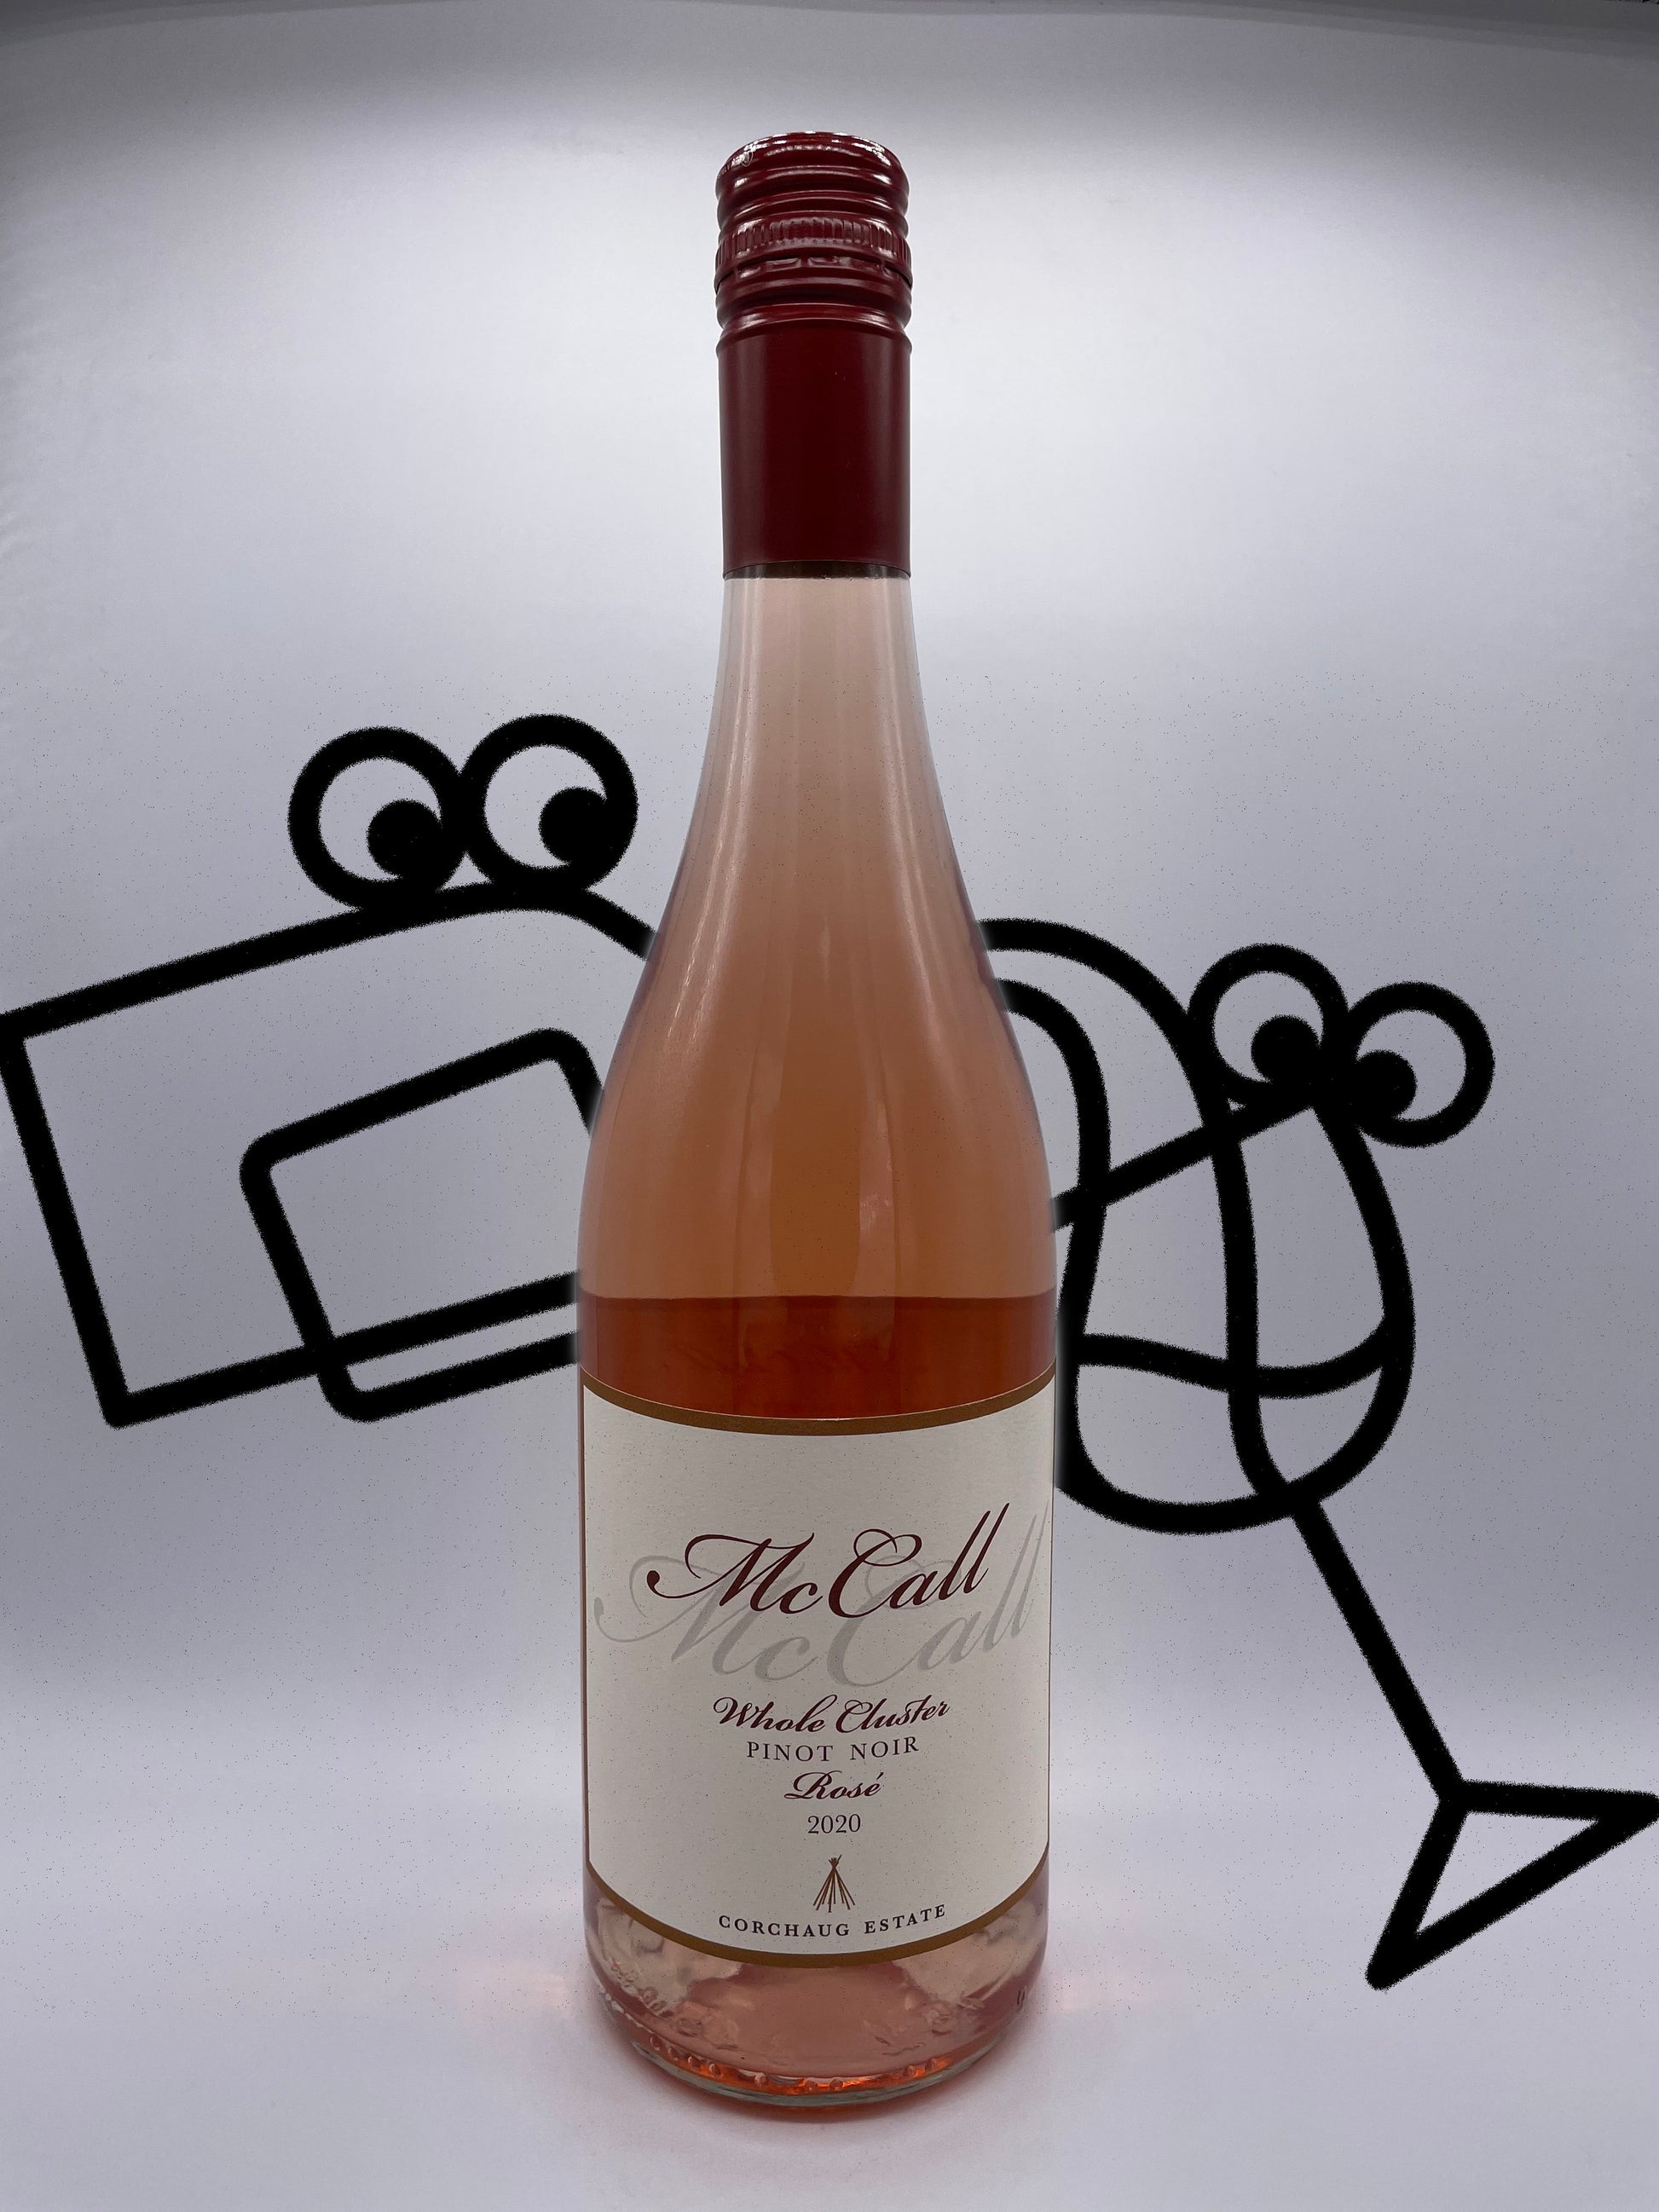 McCall 'Whole Cluster Pinot Noir Rosé' Long Island, New York Williston Park Wines